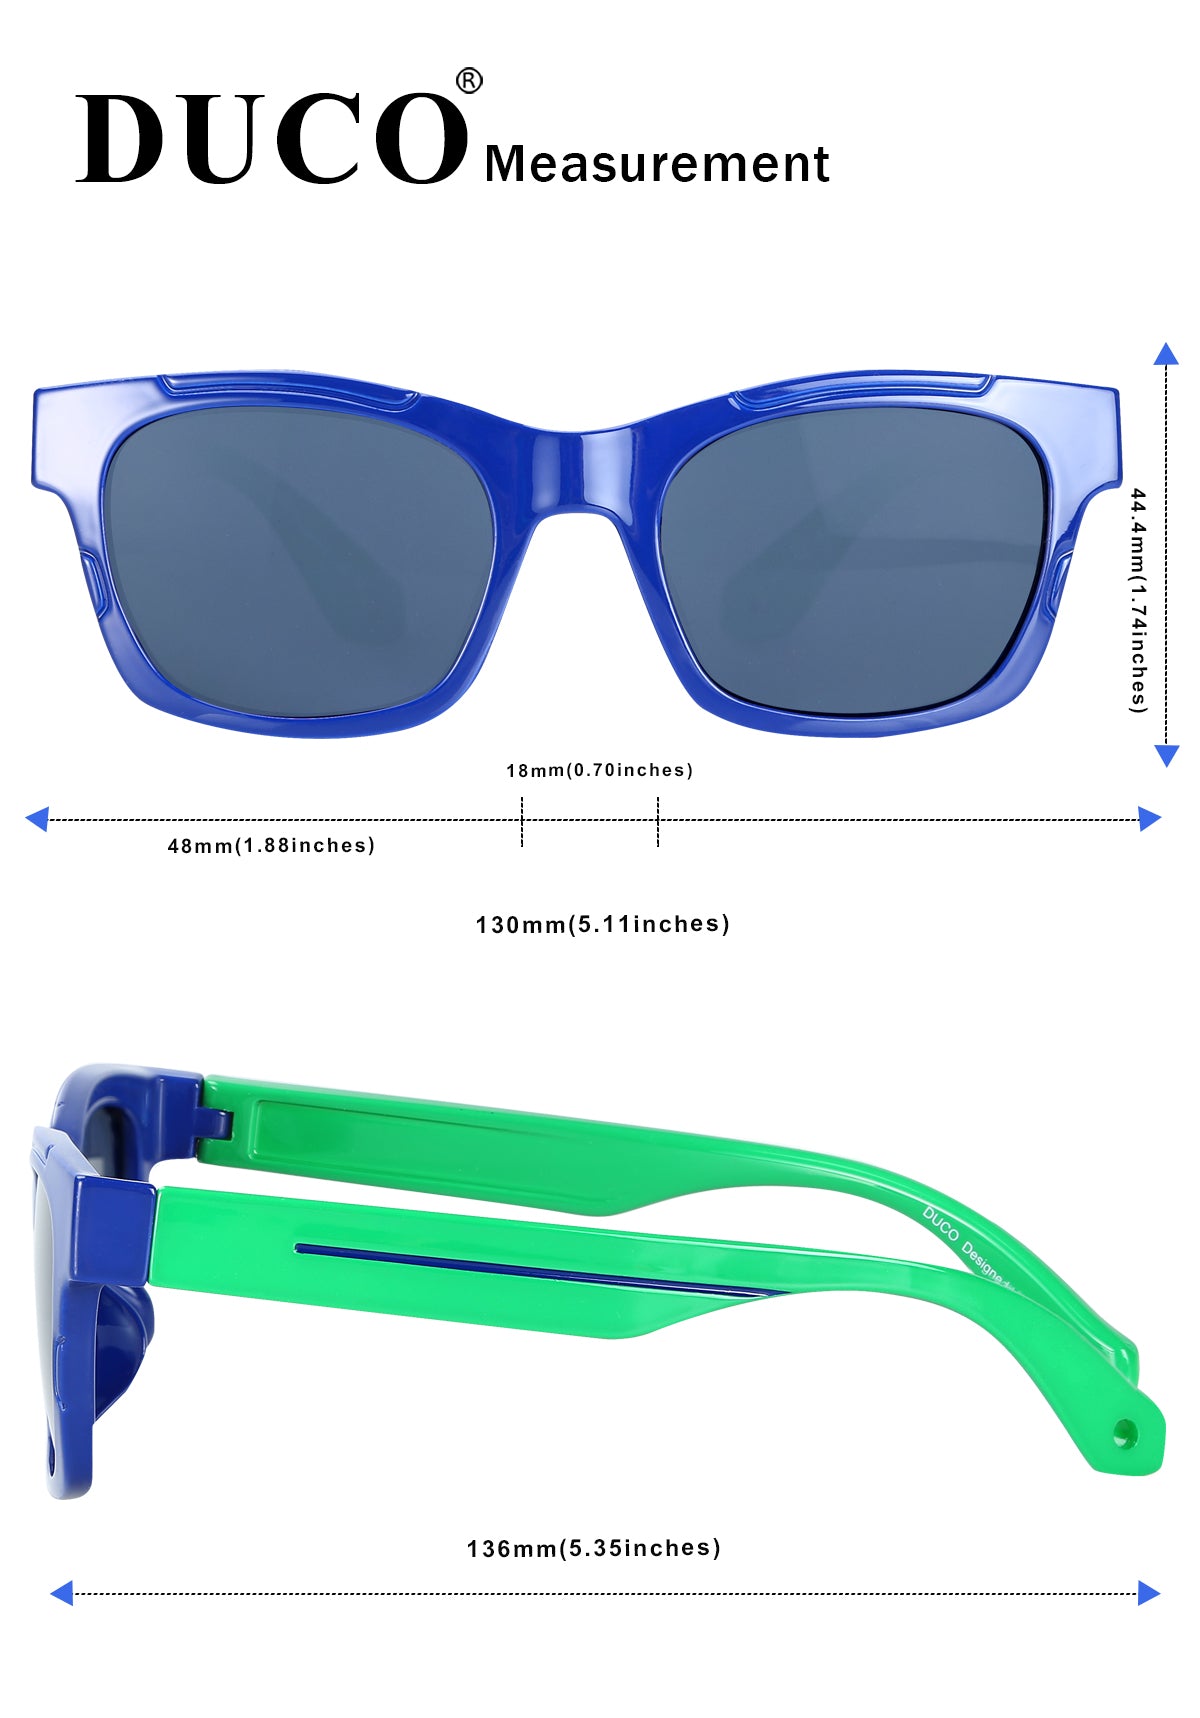 DUCO GLASSES-The right kind of shady DUCO TPEE Superlight Kids Sport Polarized Sunglasses For Kids Boys Girls Rubber Flexible Frame Sunglasses Duco Sunglasses